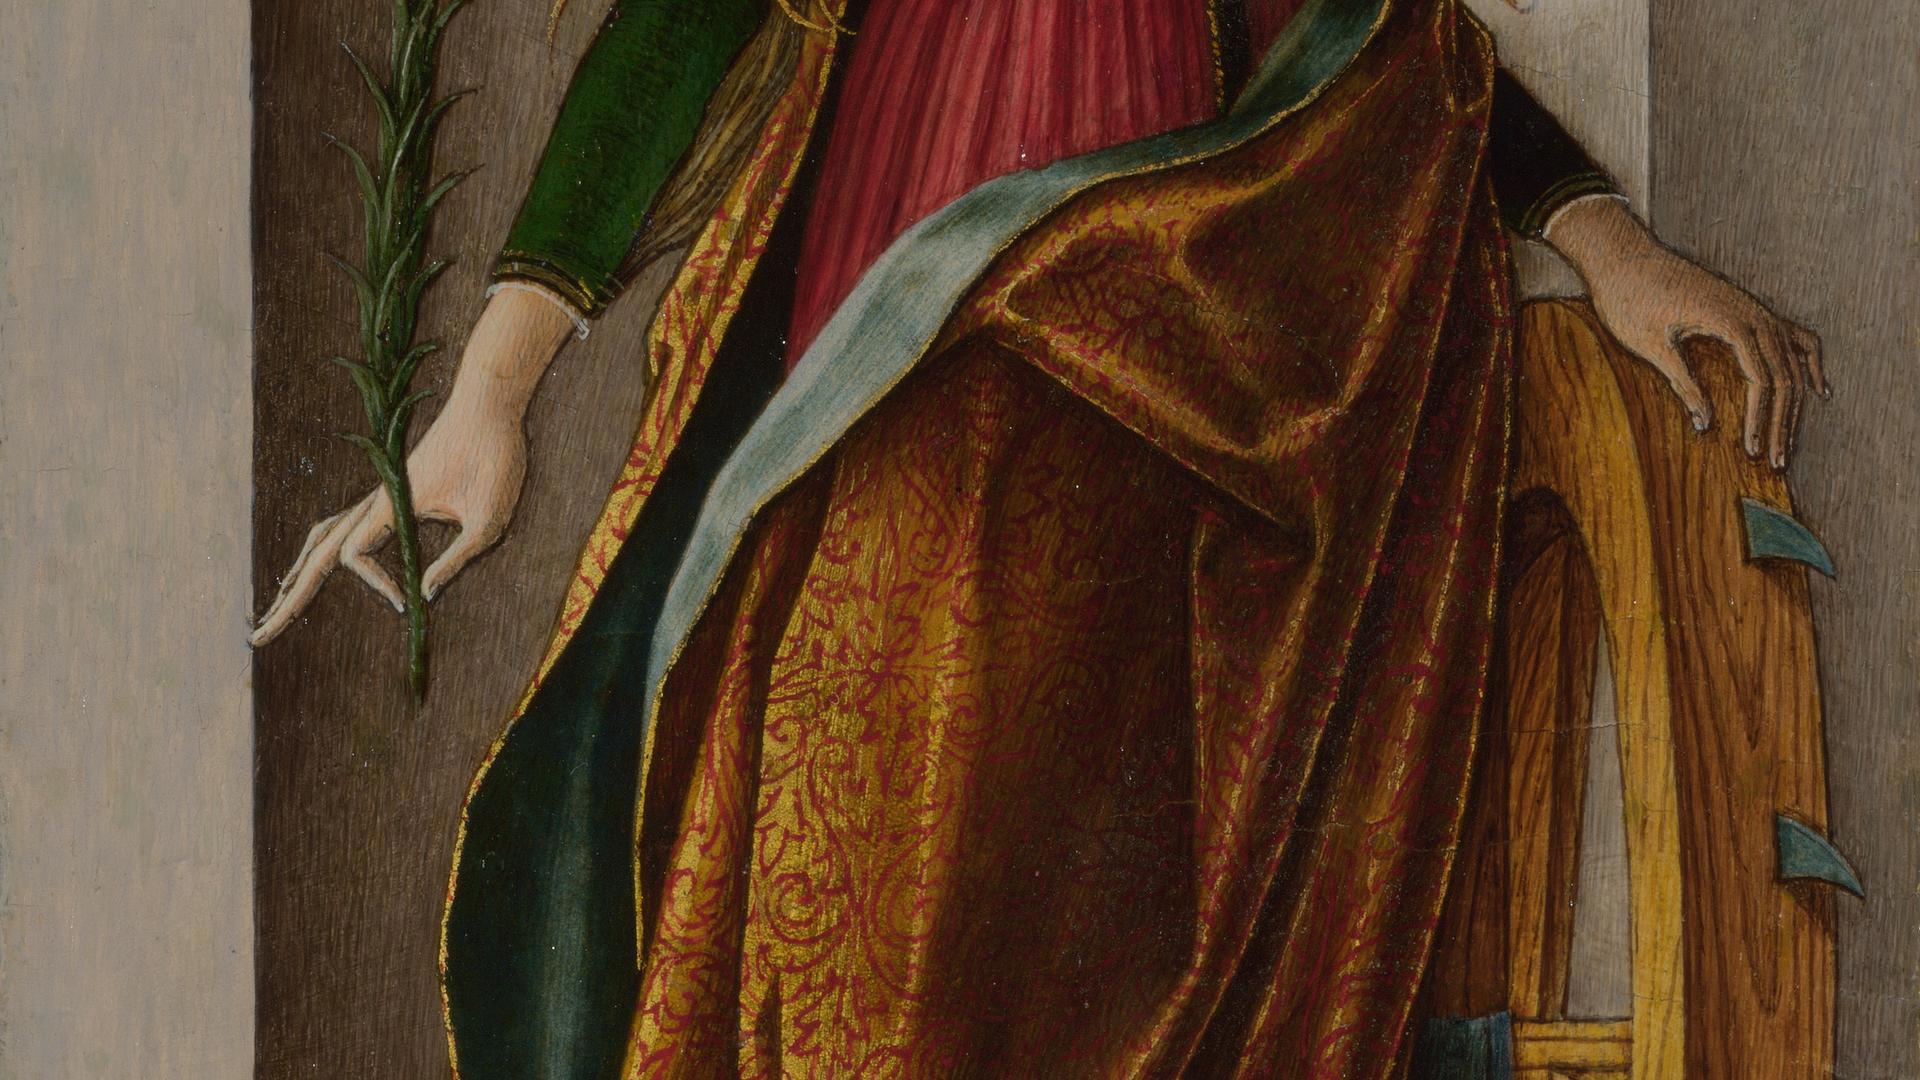 Saint Catherine of Alexandria by Carlo Crivelli